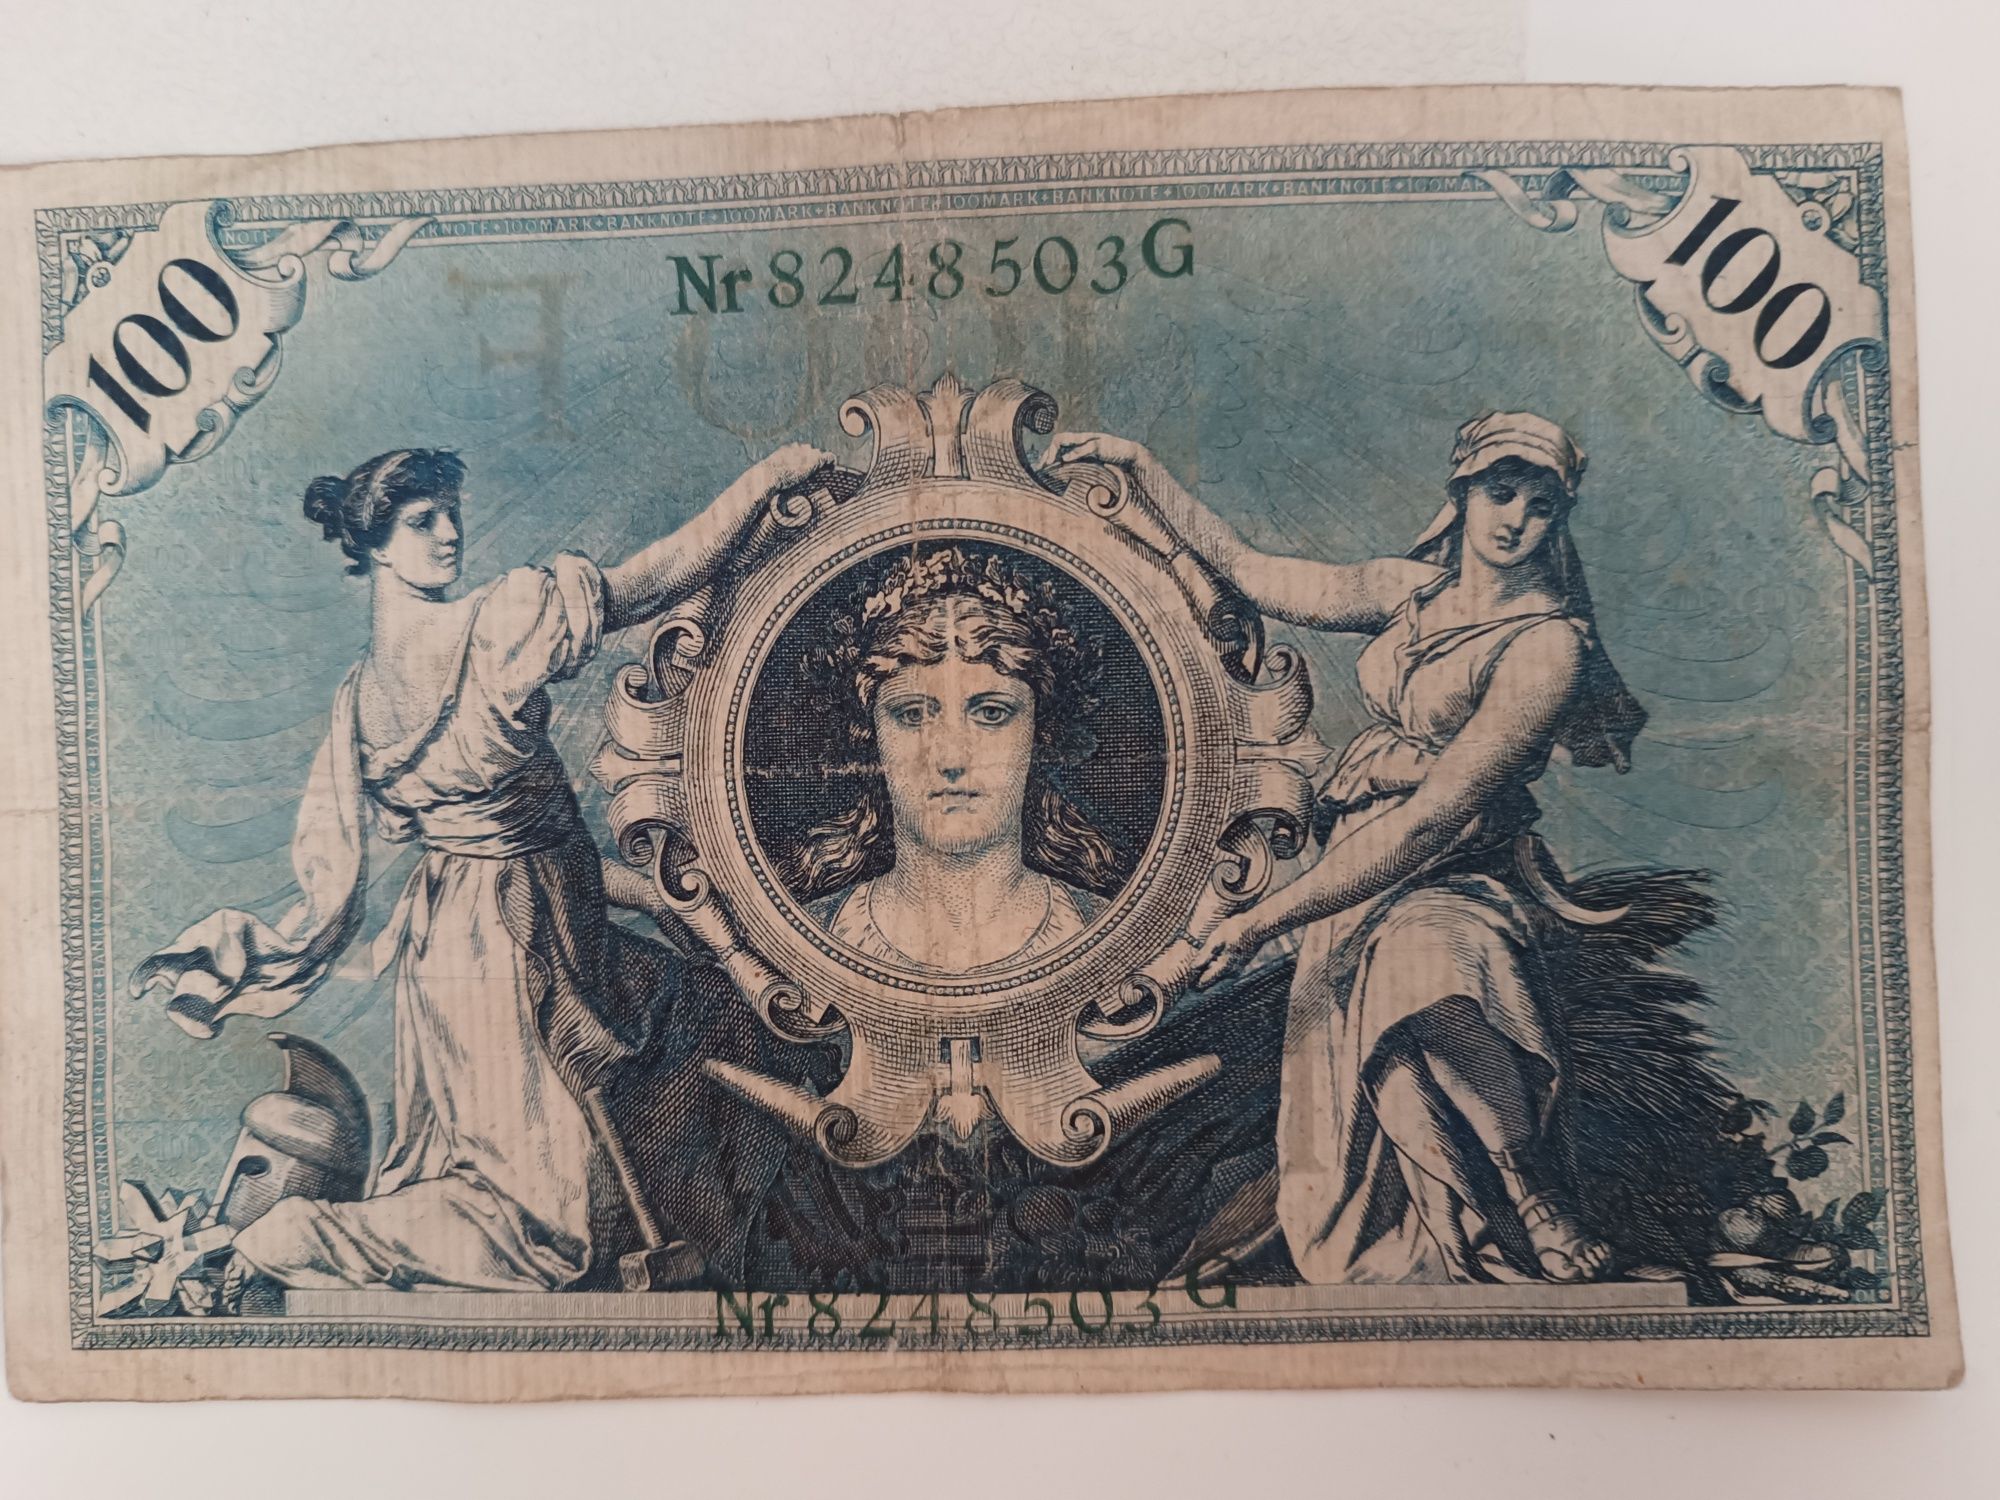 Banknot 100 marek niemieckich z 1908 roku